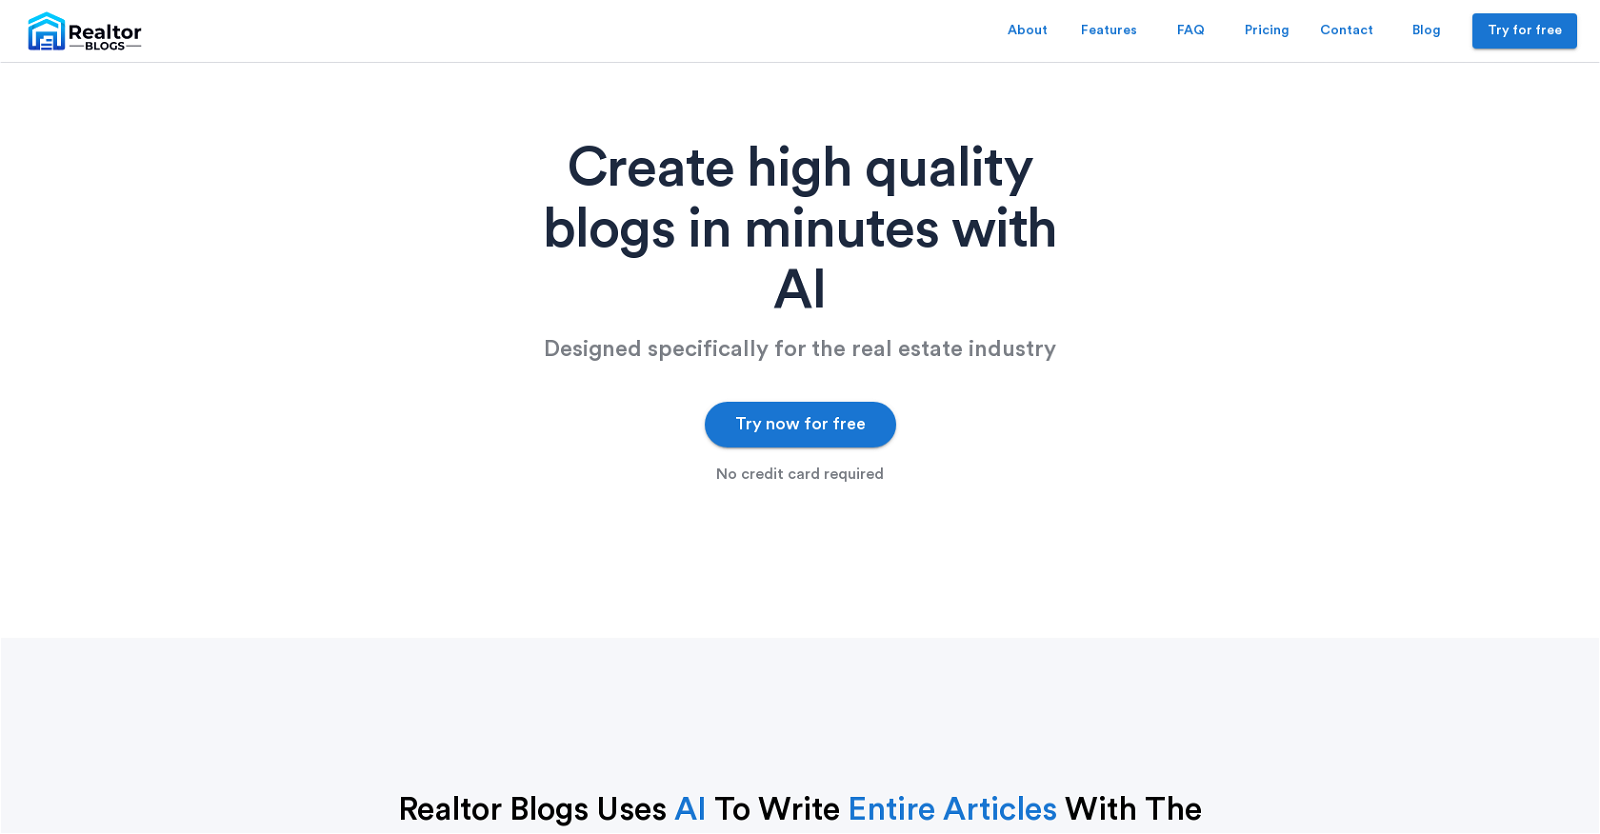 Realtor Blogs